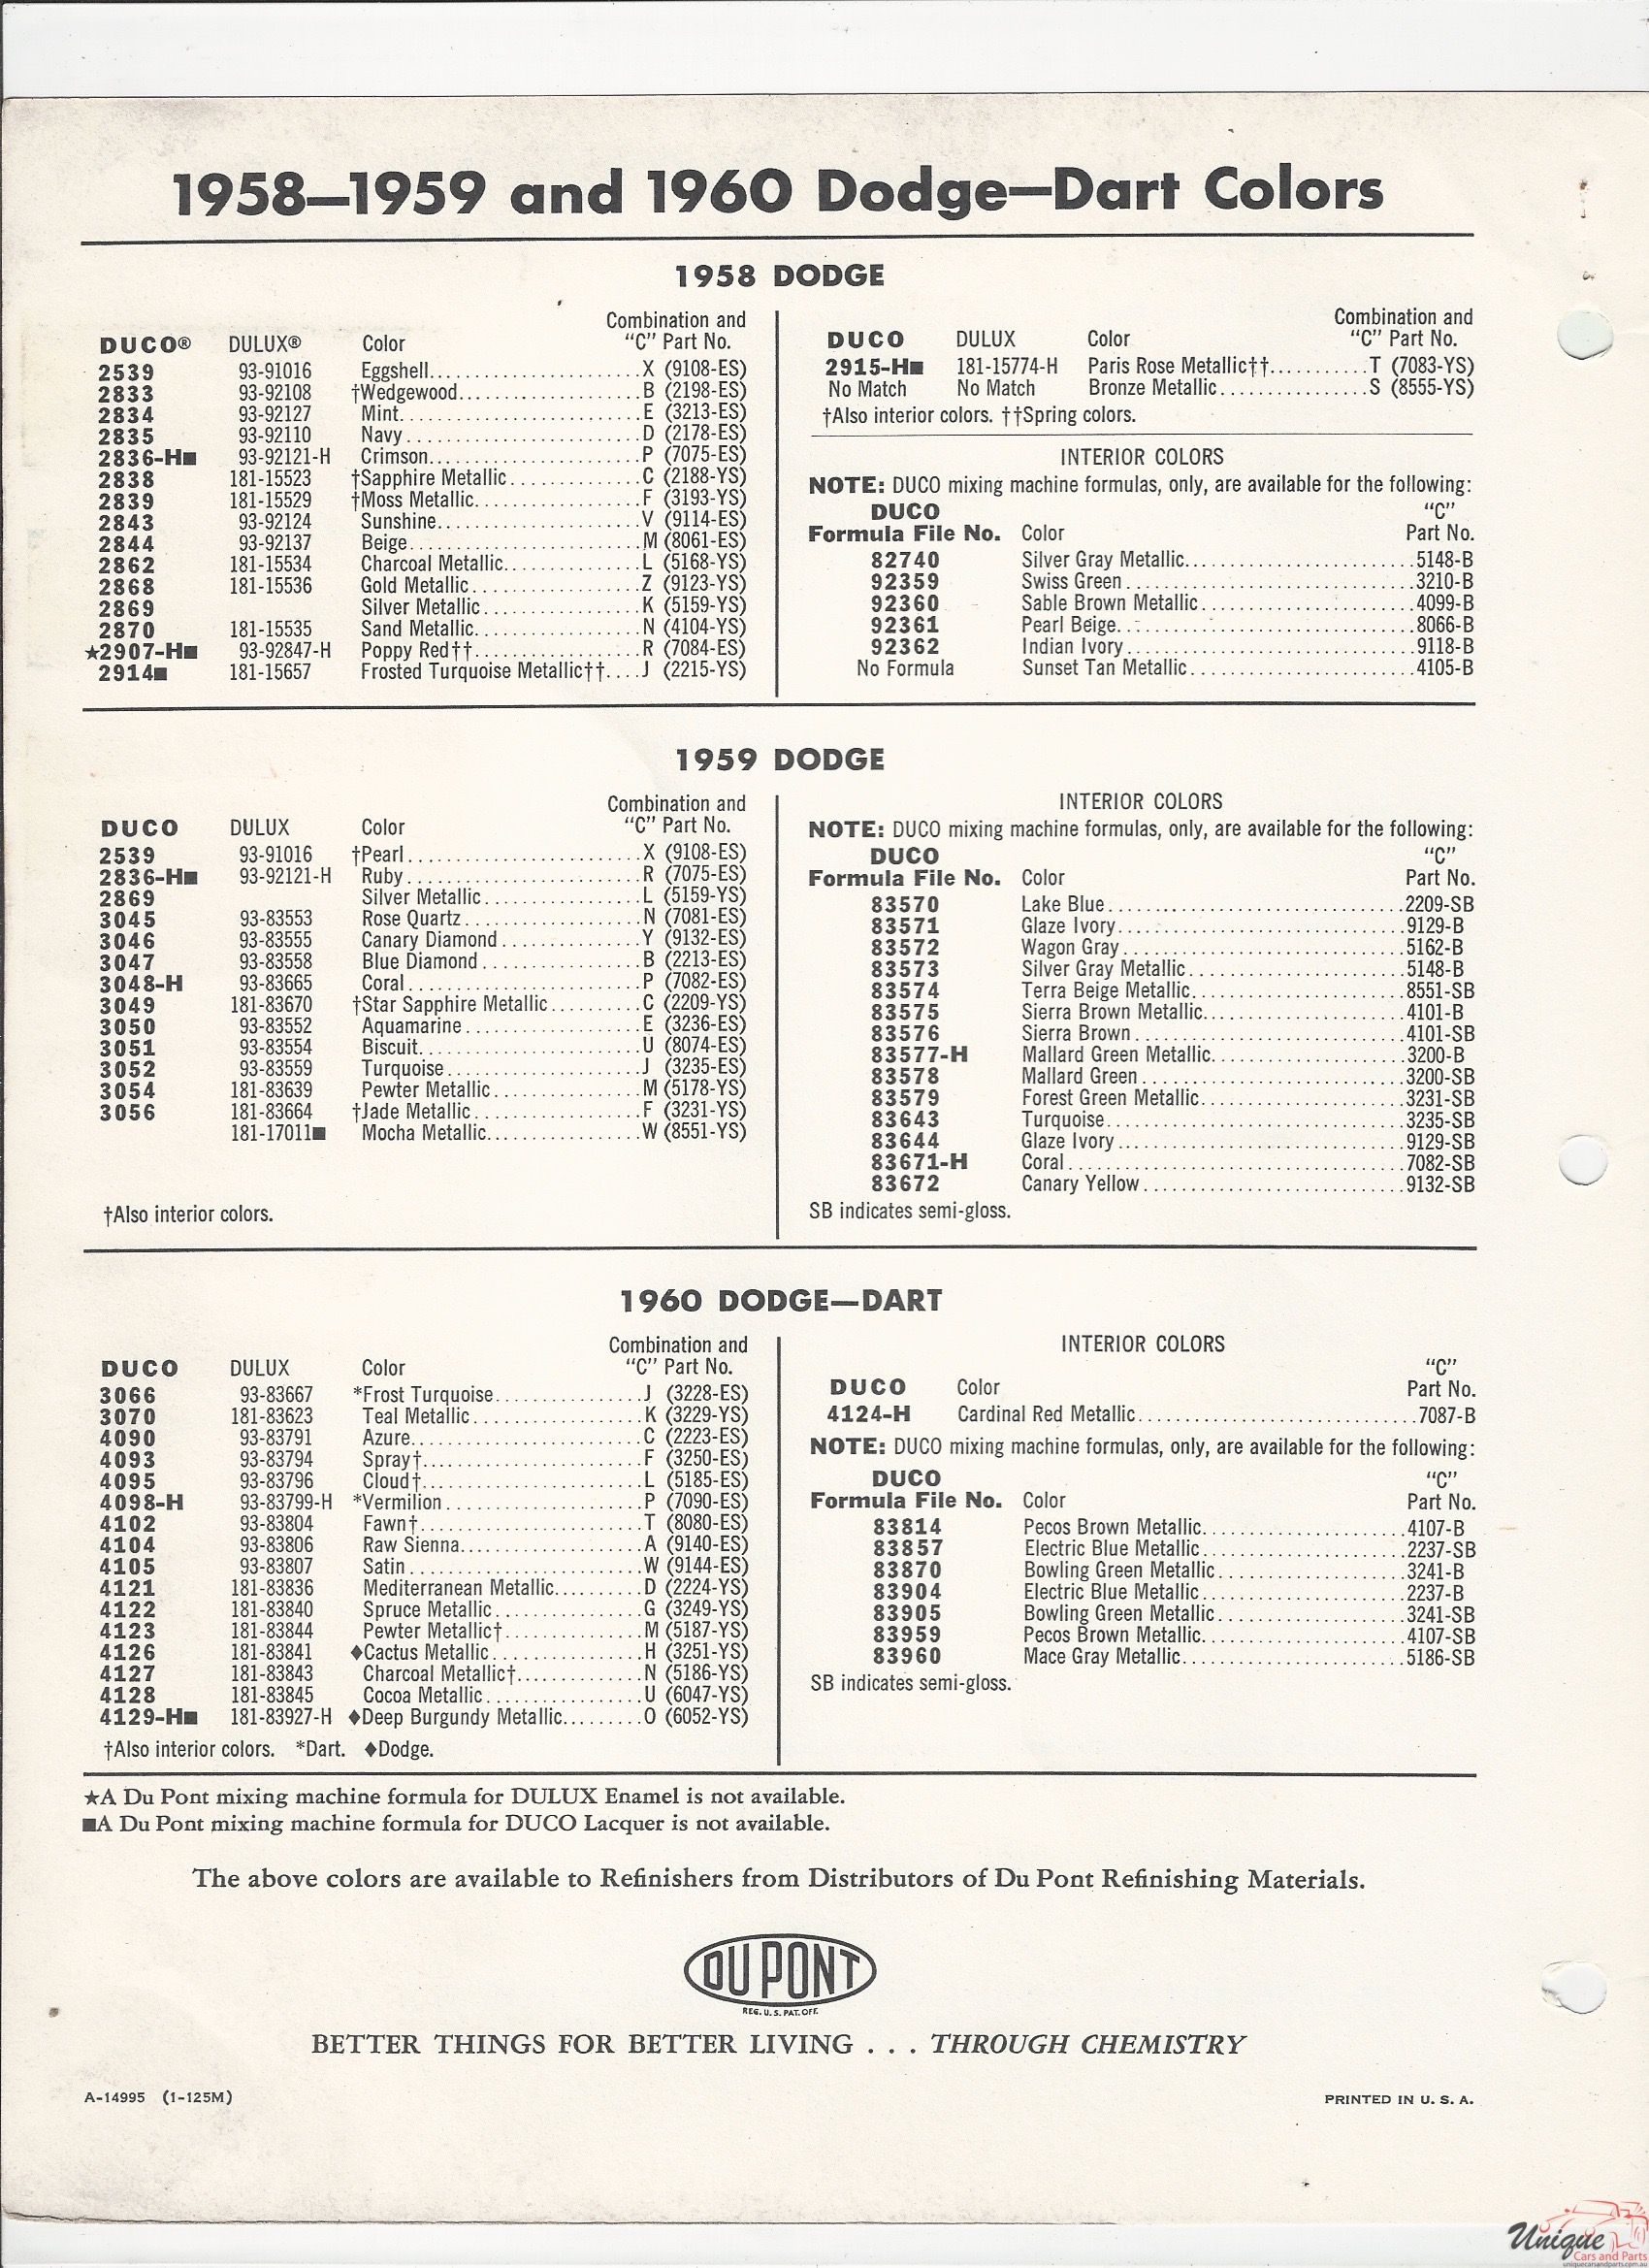 1961 Dodge-5 Paint Charts